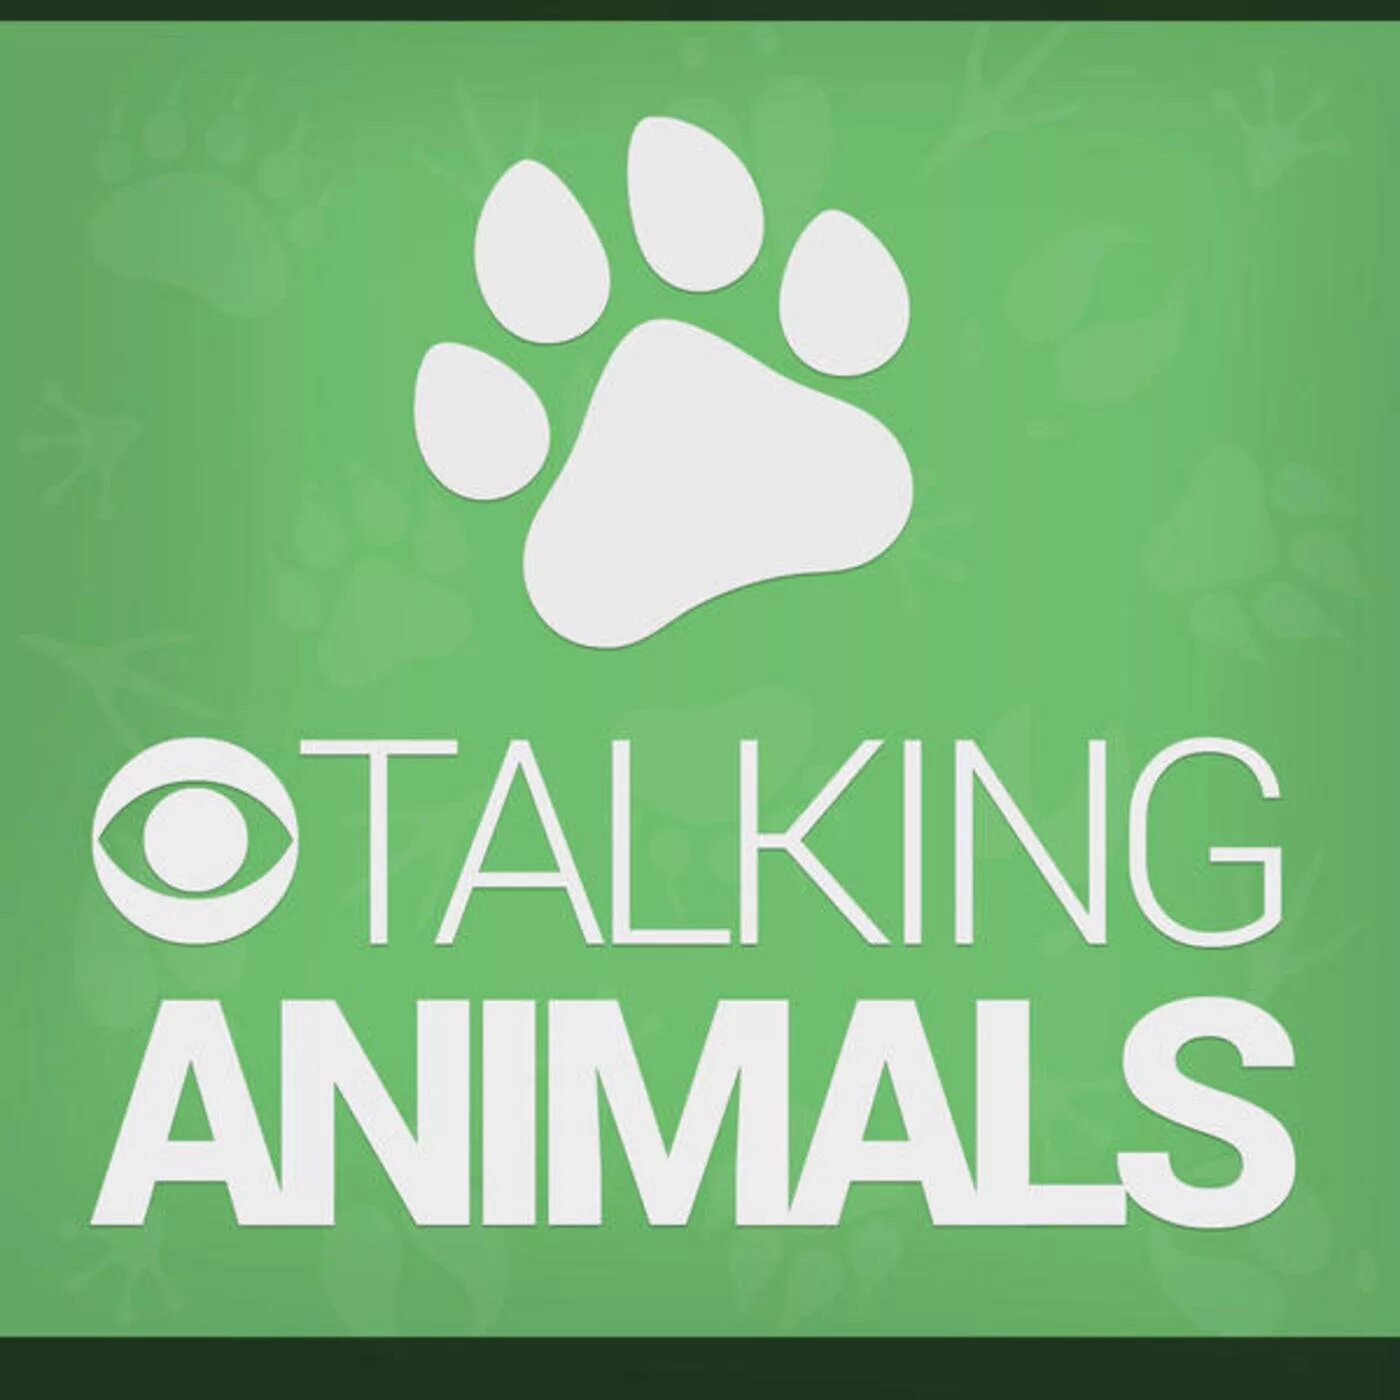 Animal studio. Animals talk. Talking animals игры. Энимал студио. Подкаст Энималс.